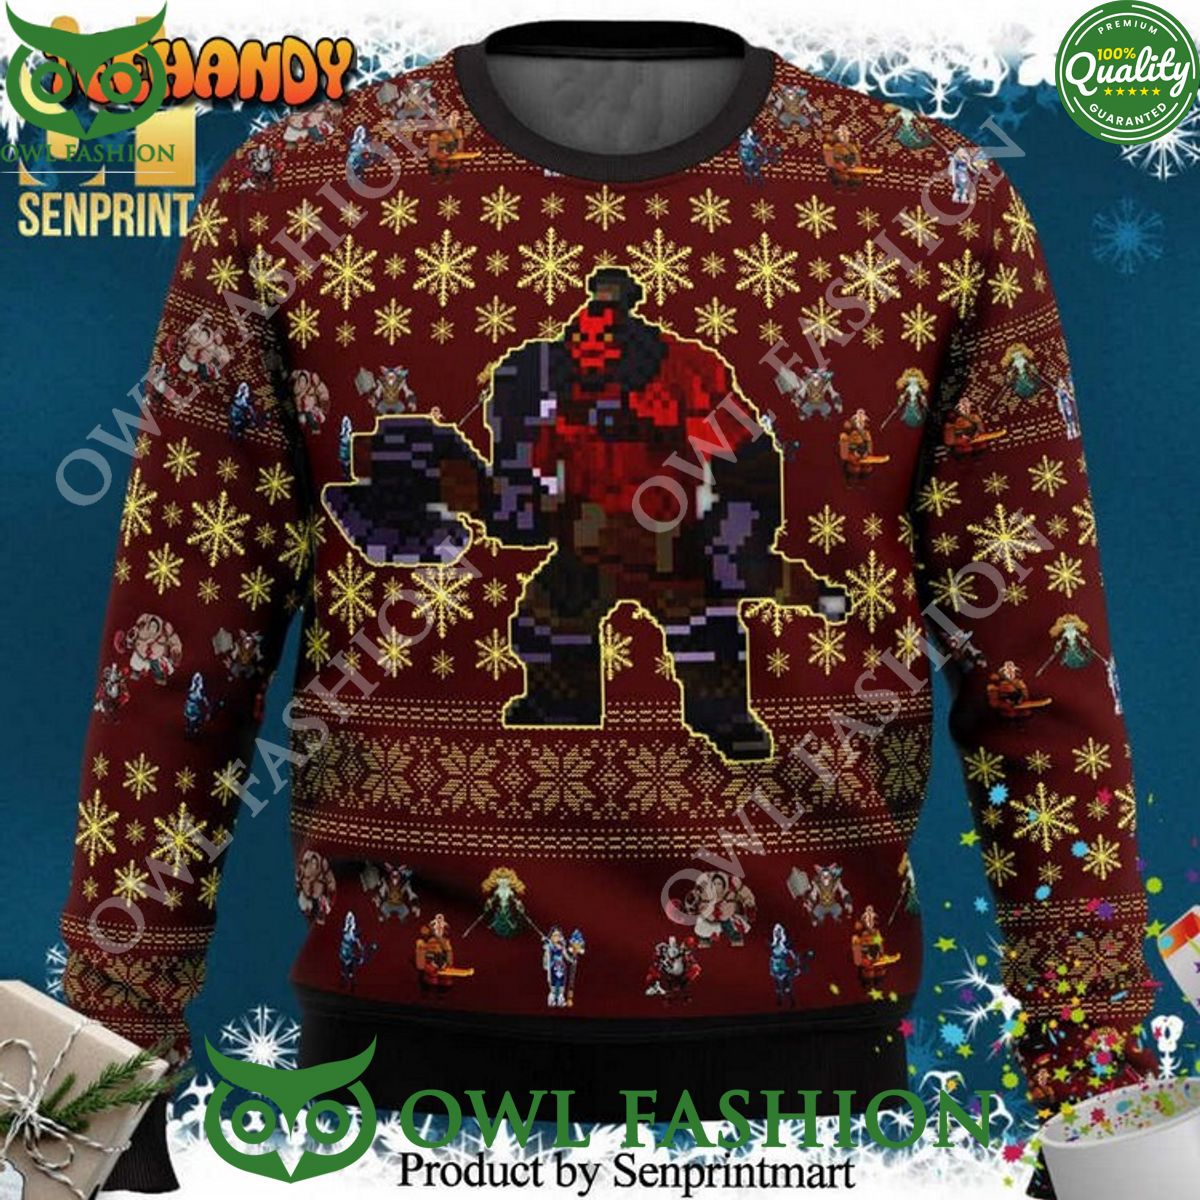 Axe Hero Dota 2 Knitted Ugly Christmas Sweater Nice shot bro